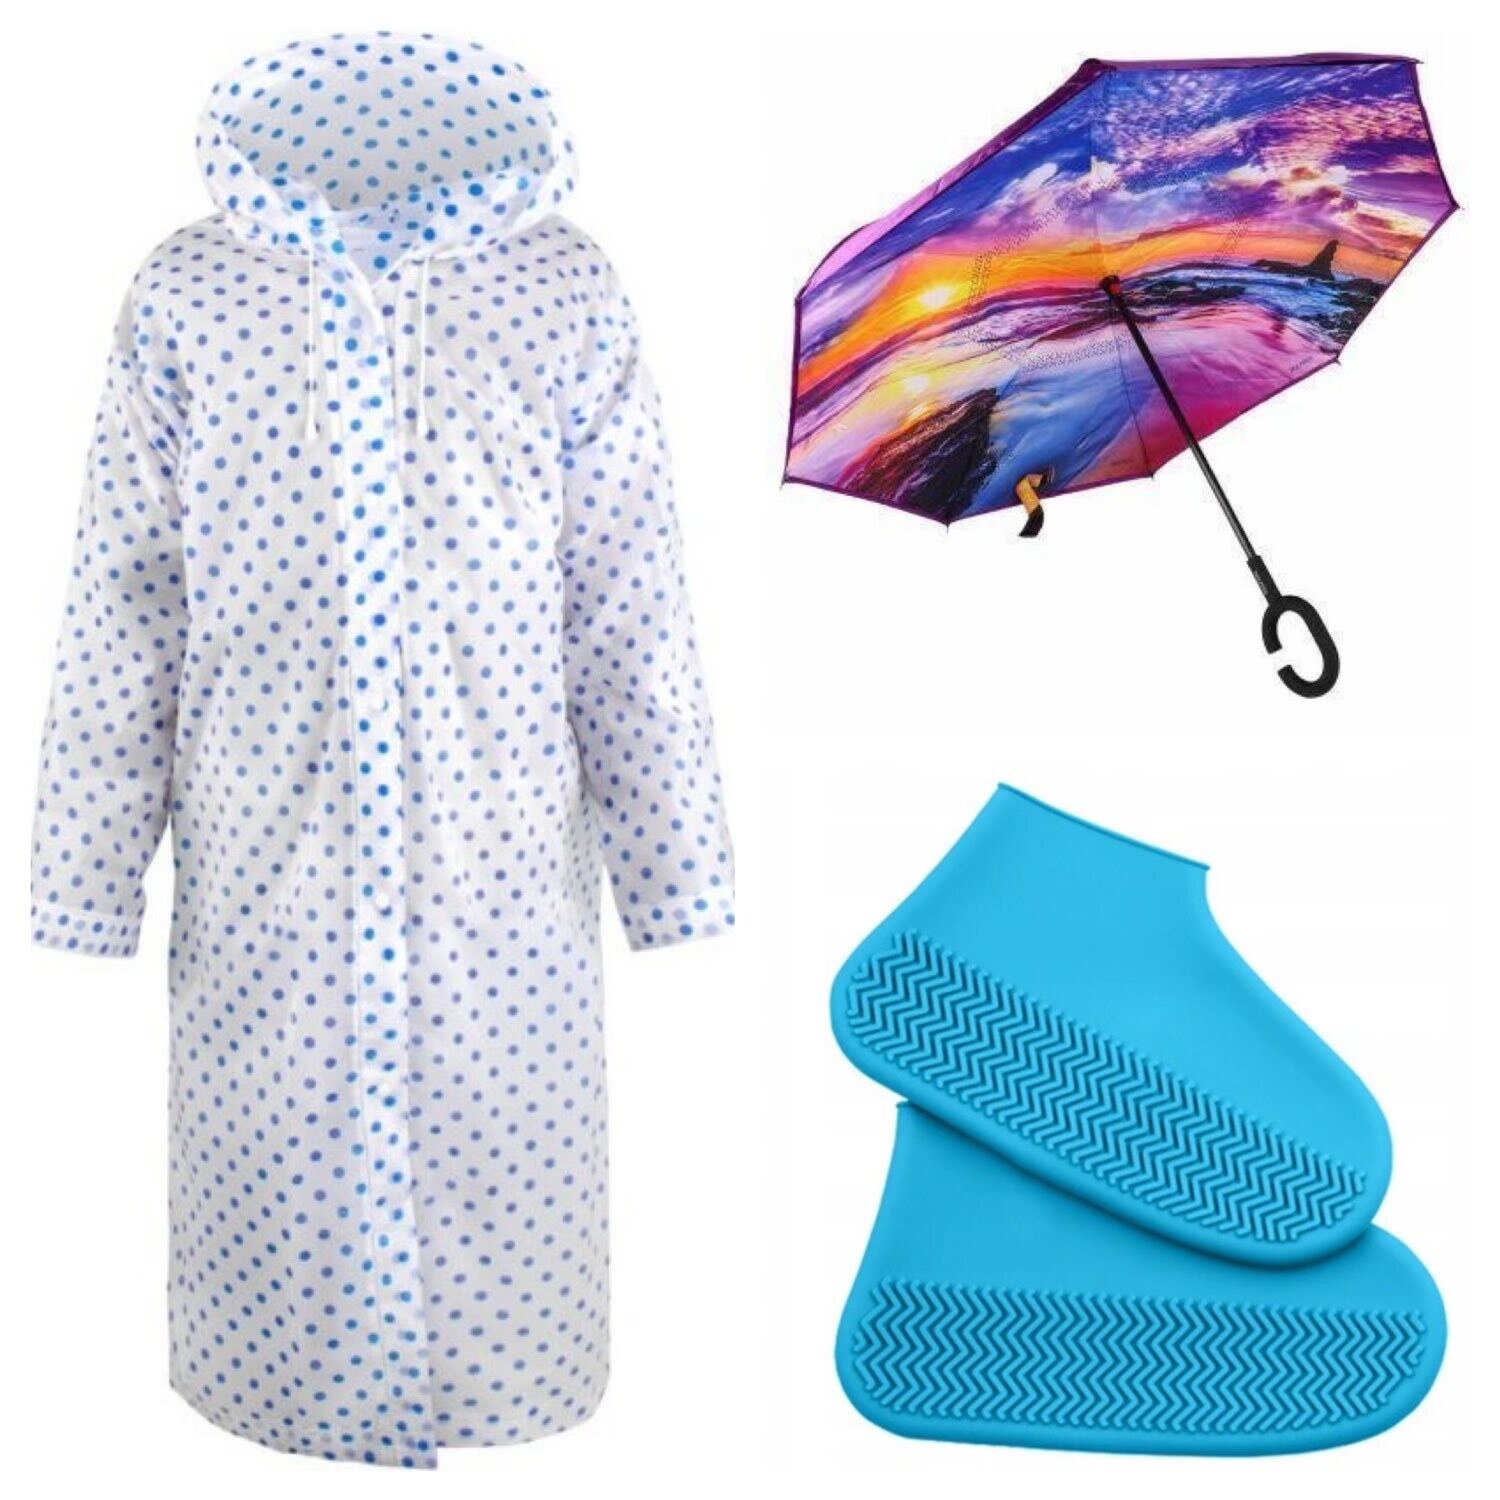 Raincoat + Umbrella + Silicone shoe cover case - საწვიმარი + ქოლგა + ფეხსაცმლის სილიკონი